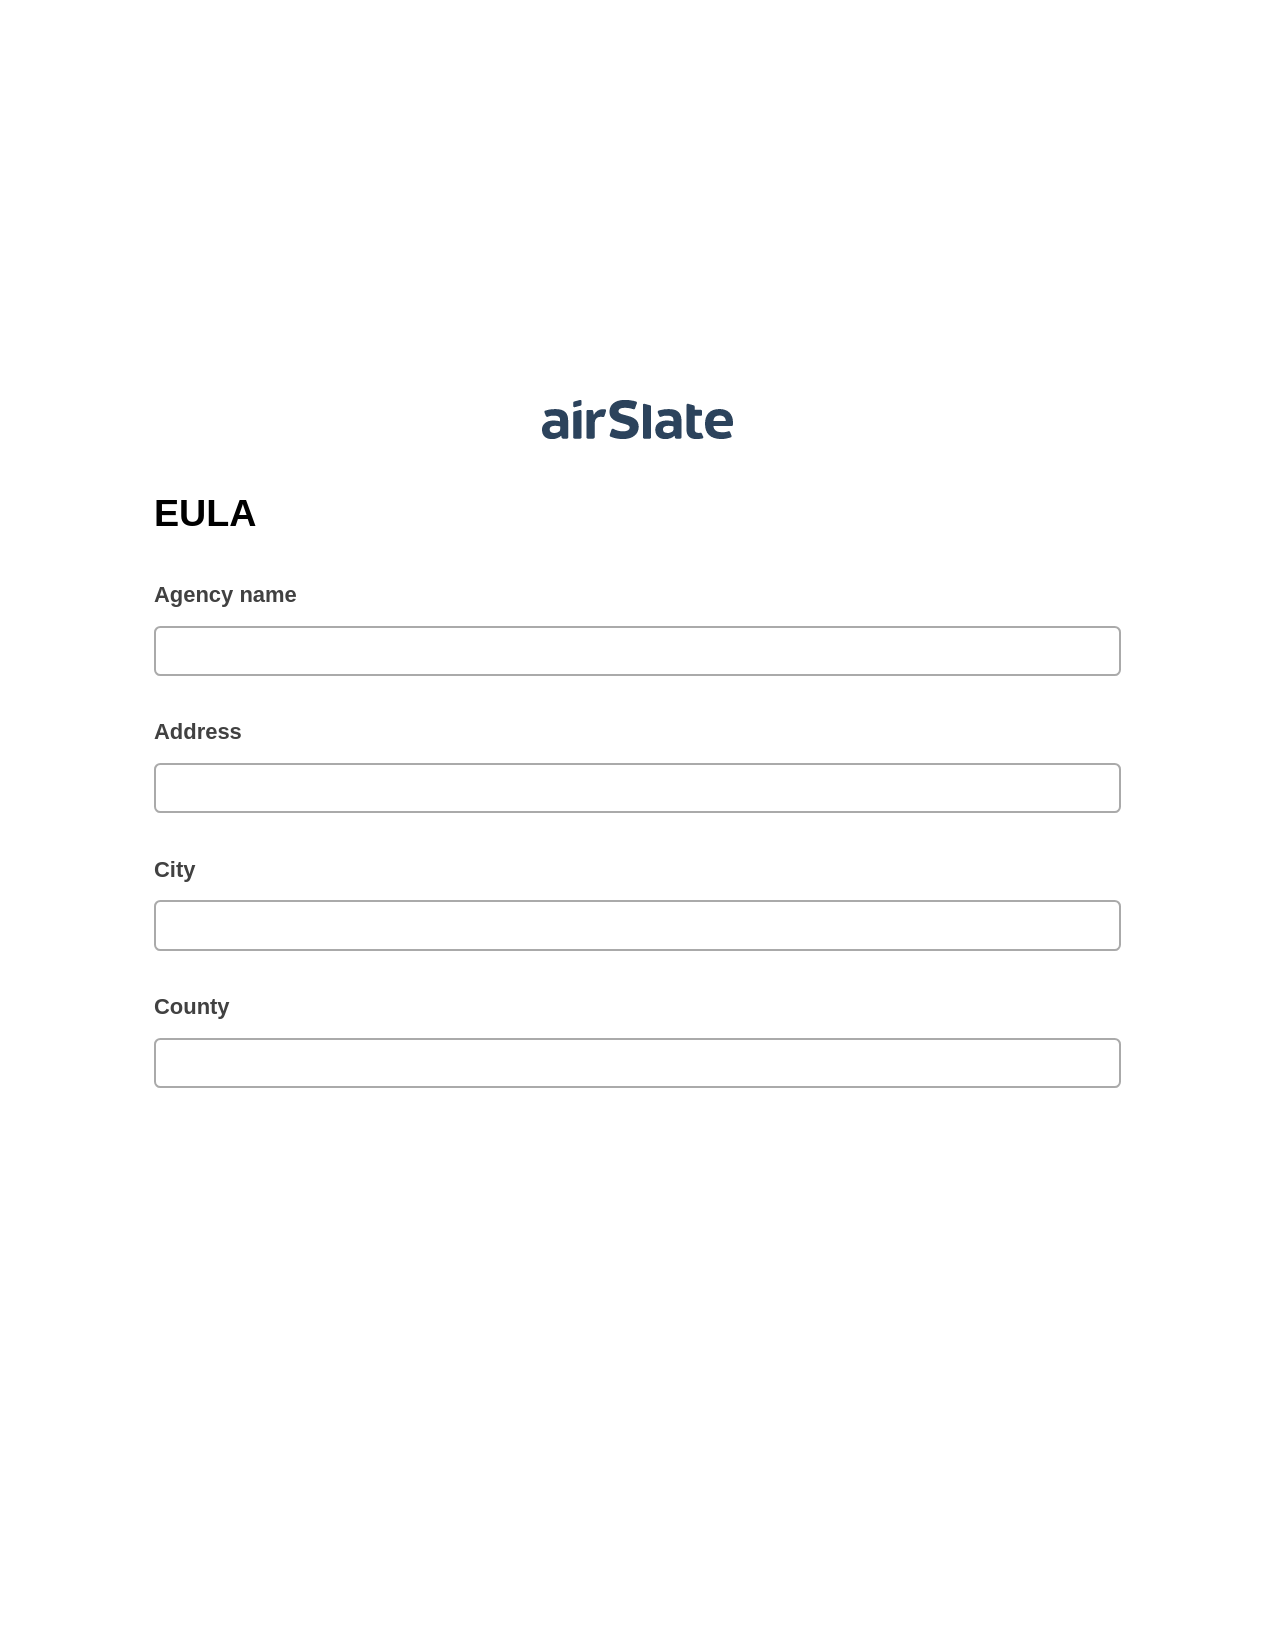 EULA Pre-fill Document Bot, Roles Reminder Bot, Export to Smartsheet